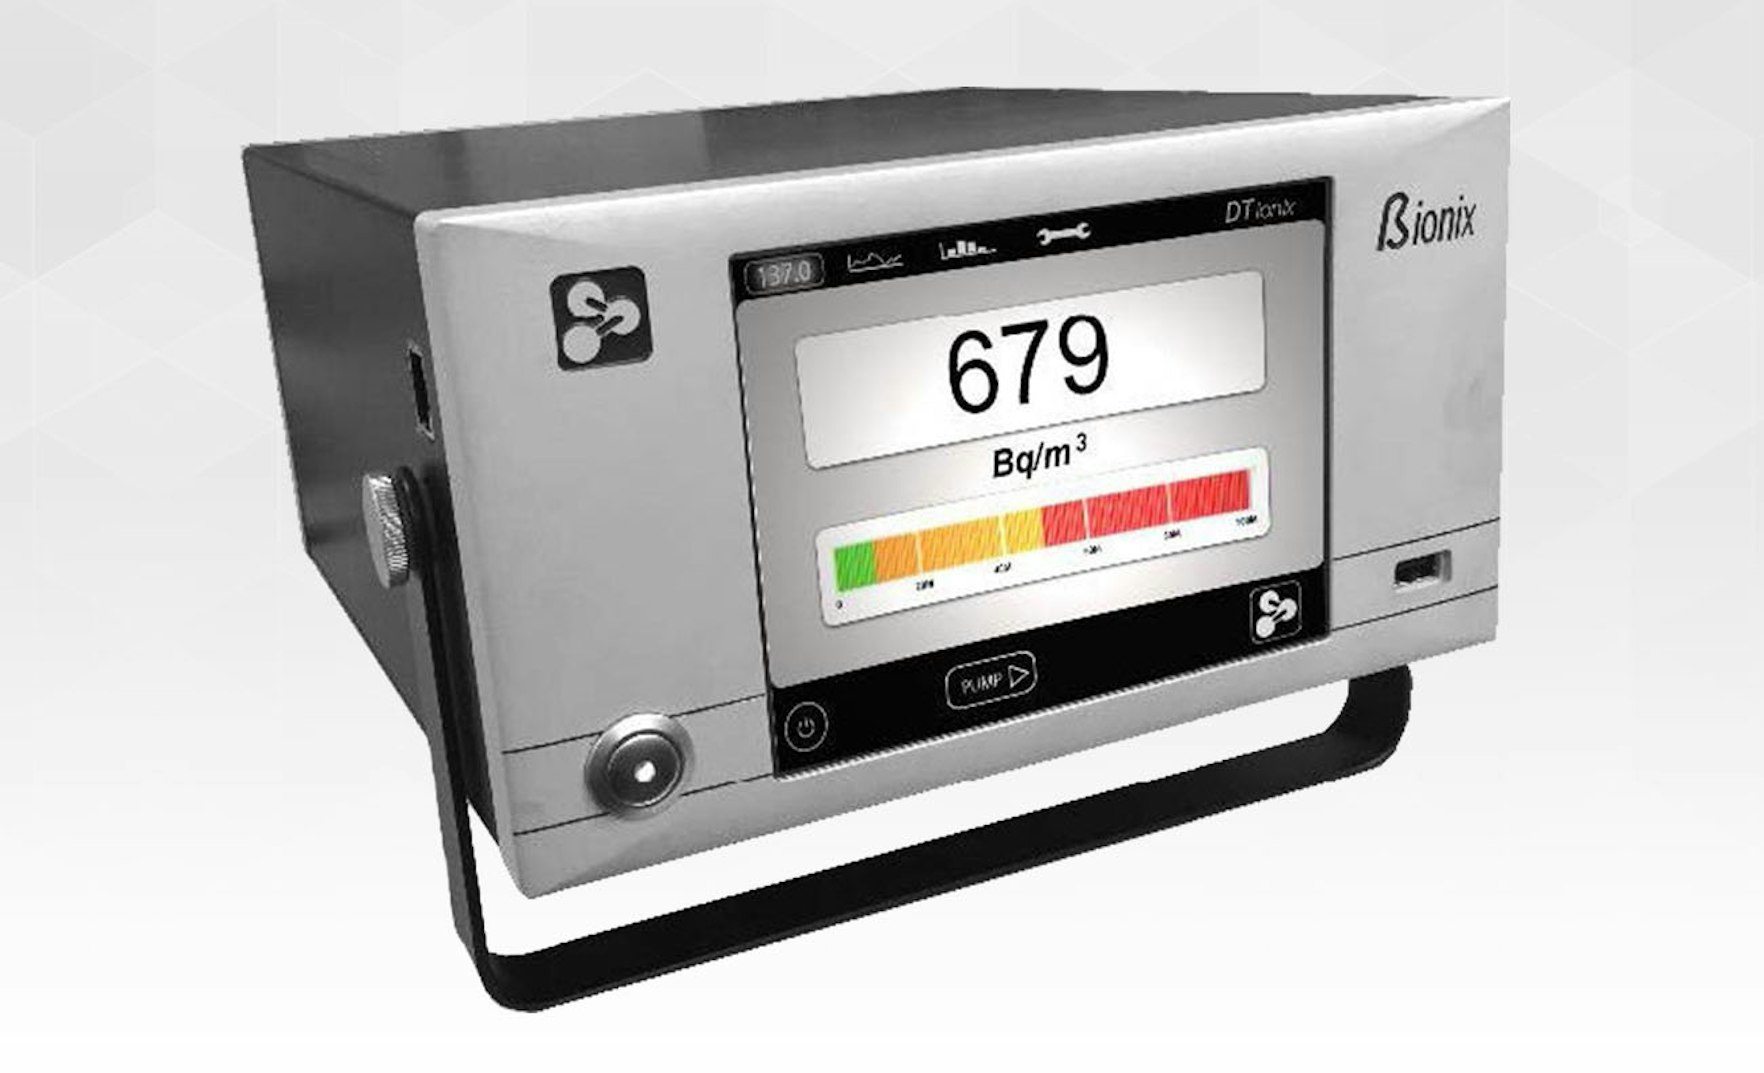 Ops 1756 promotion bionix tritium monitoremail header